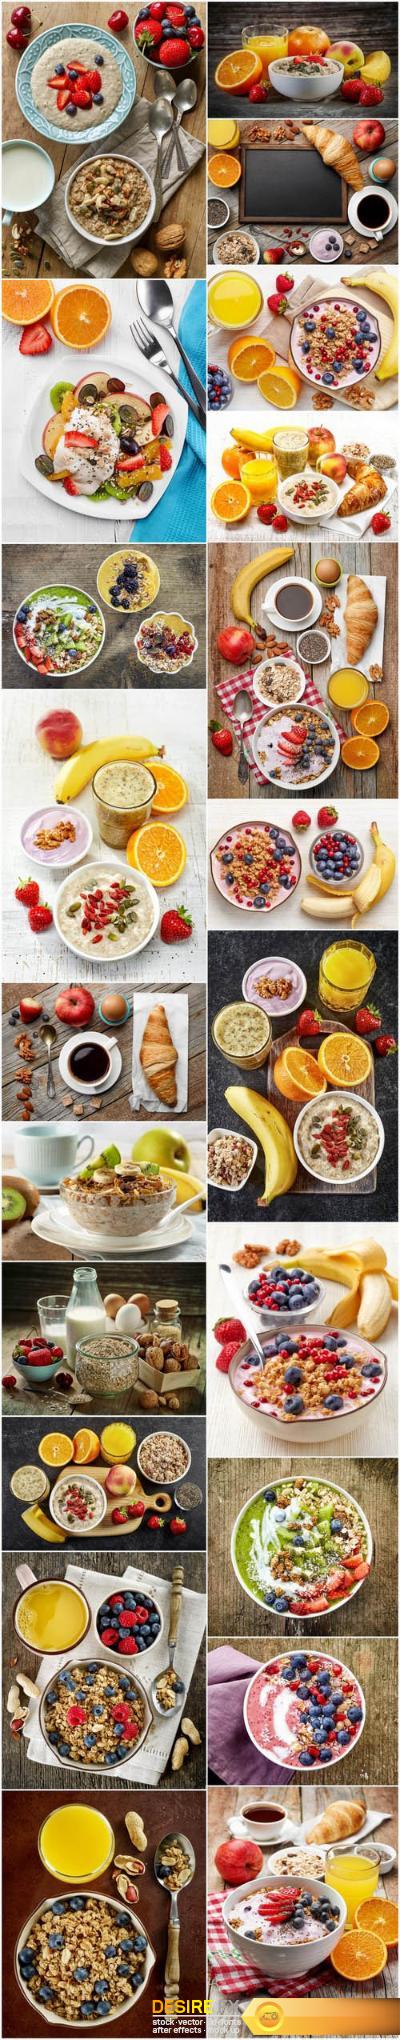 Healthy breakfast ingredients 2 - 21xUHQ JPEG